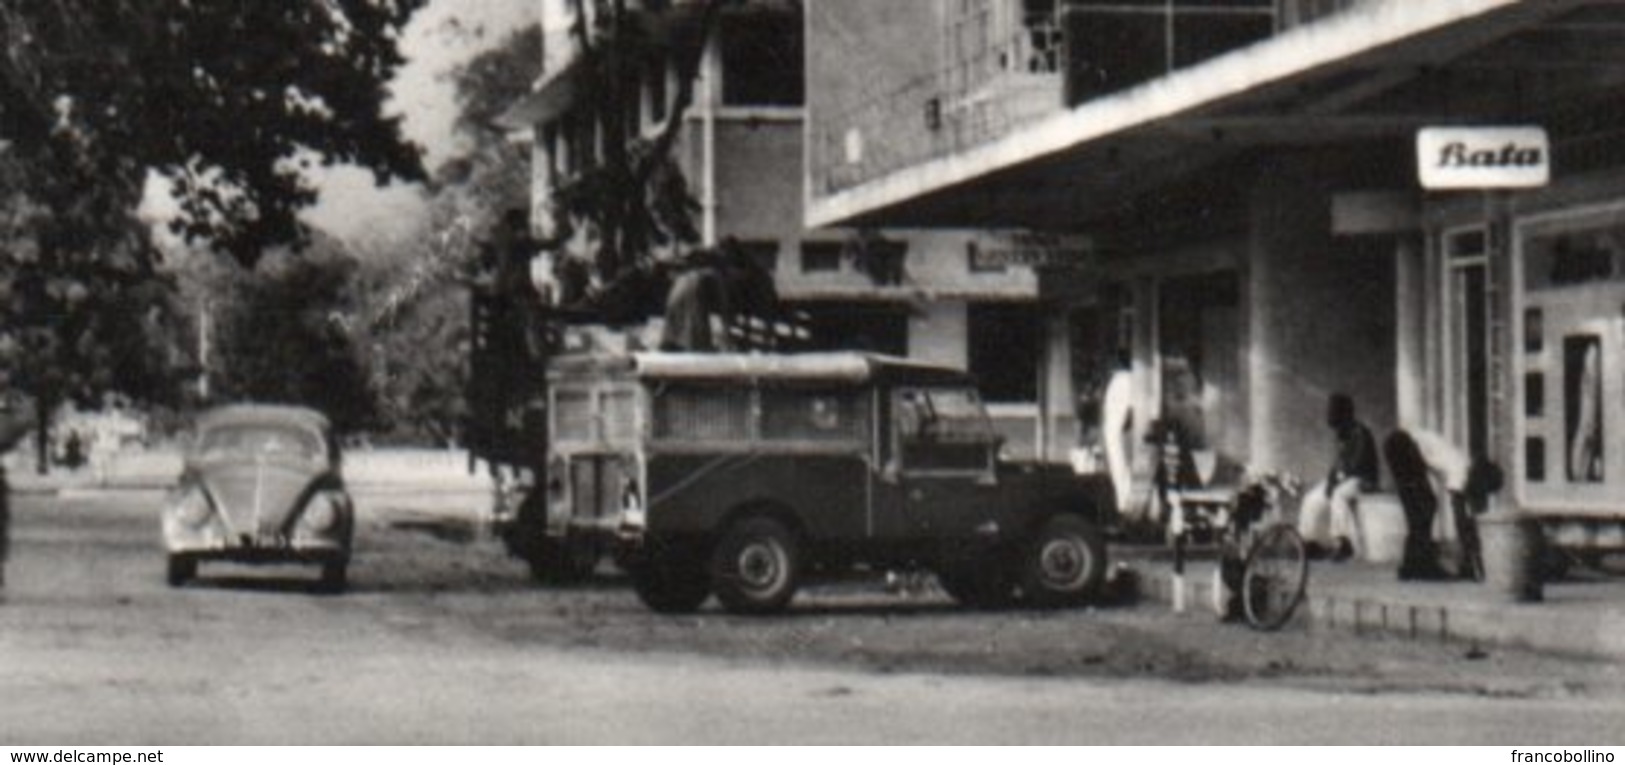 EAST AFRICA - TANGA / TANGANIKA /TANZANIA (EDITION EAST AFRICA) / OLD CARS - VW KAFER-BEETLE /LAND ROVER - 1961 - Tanzania